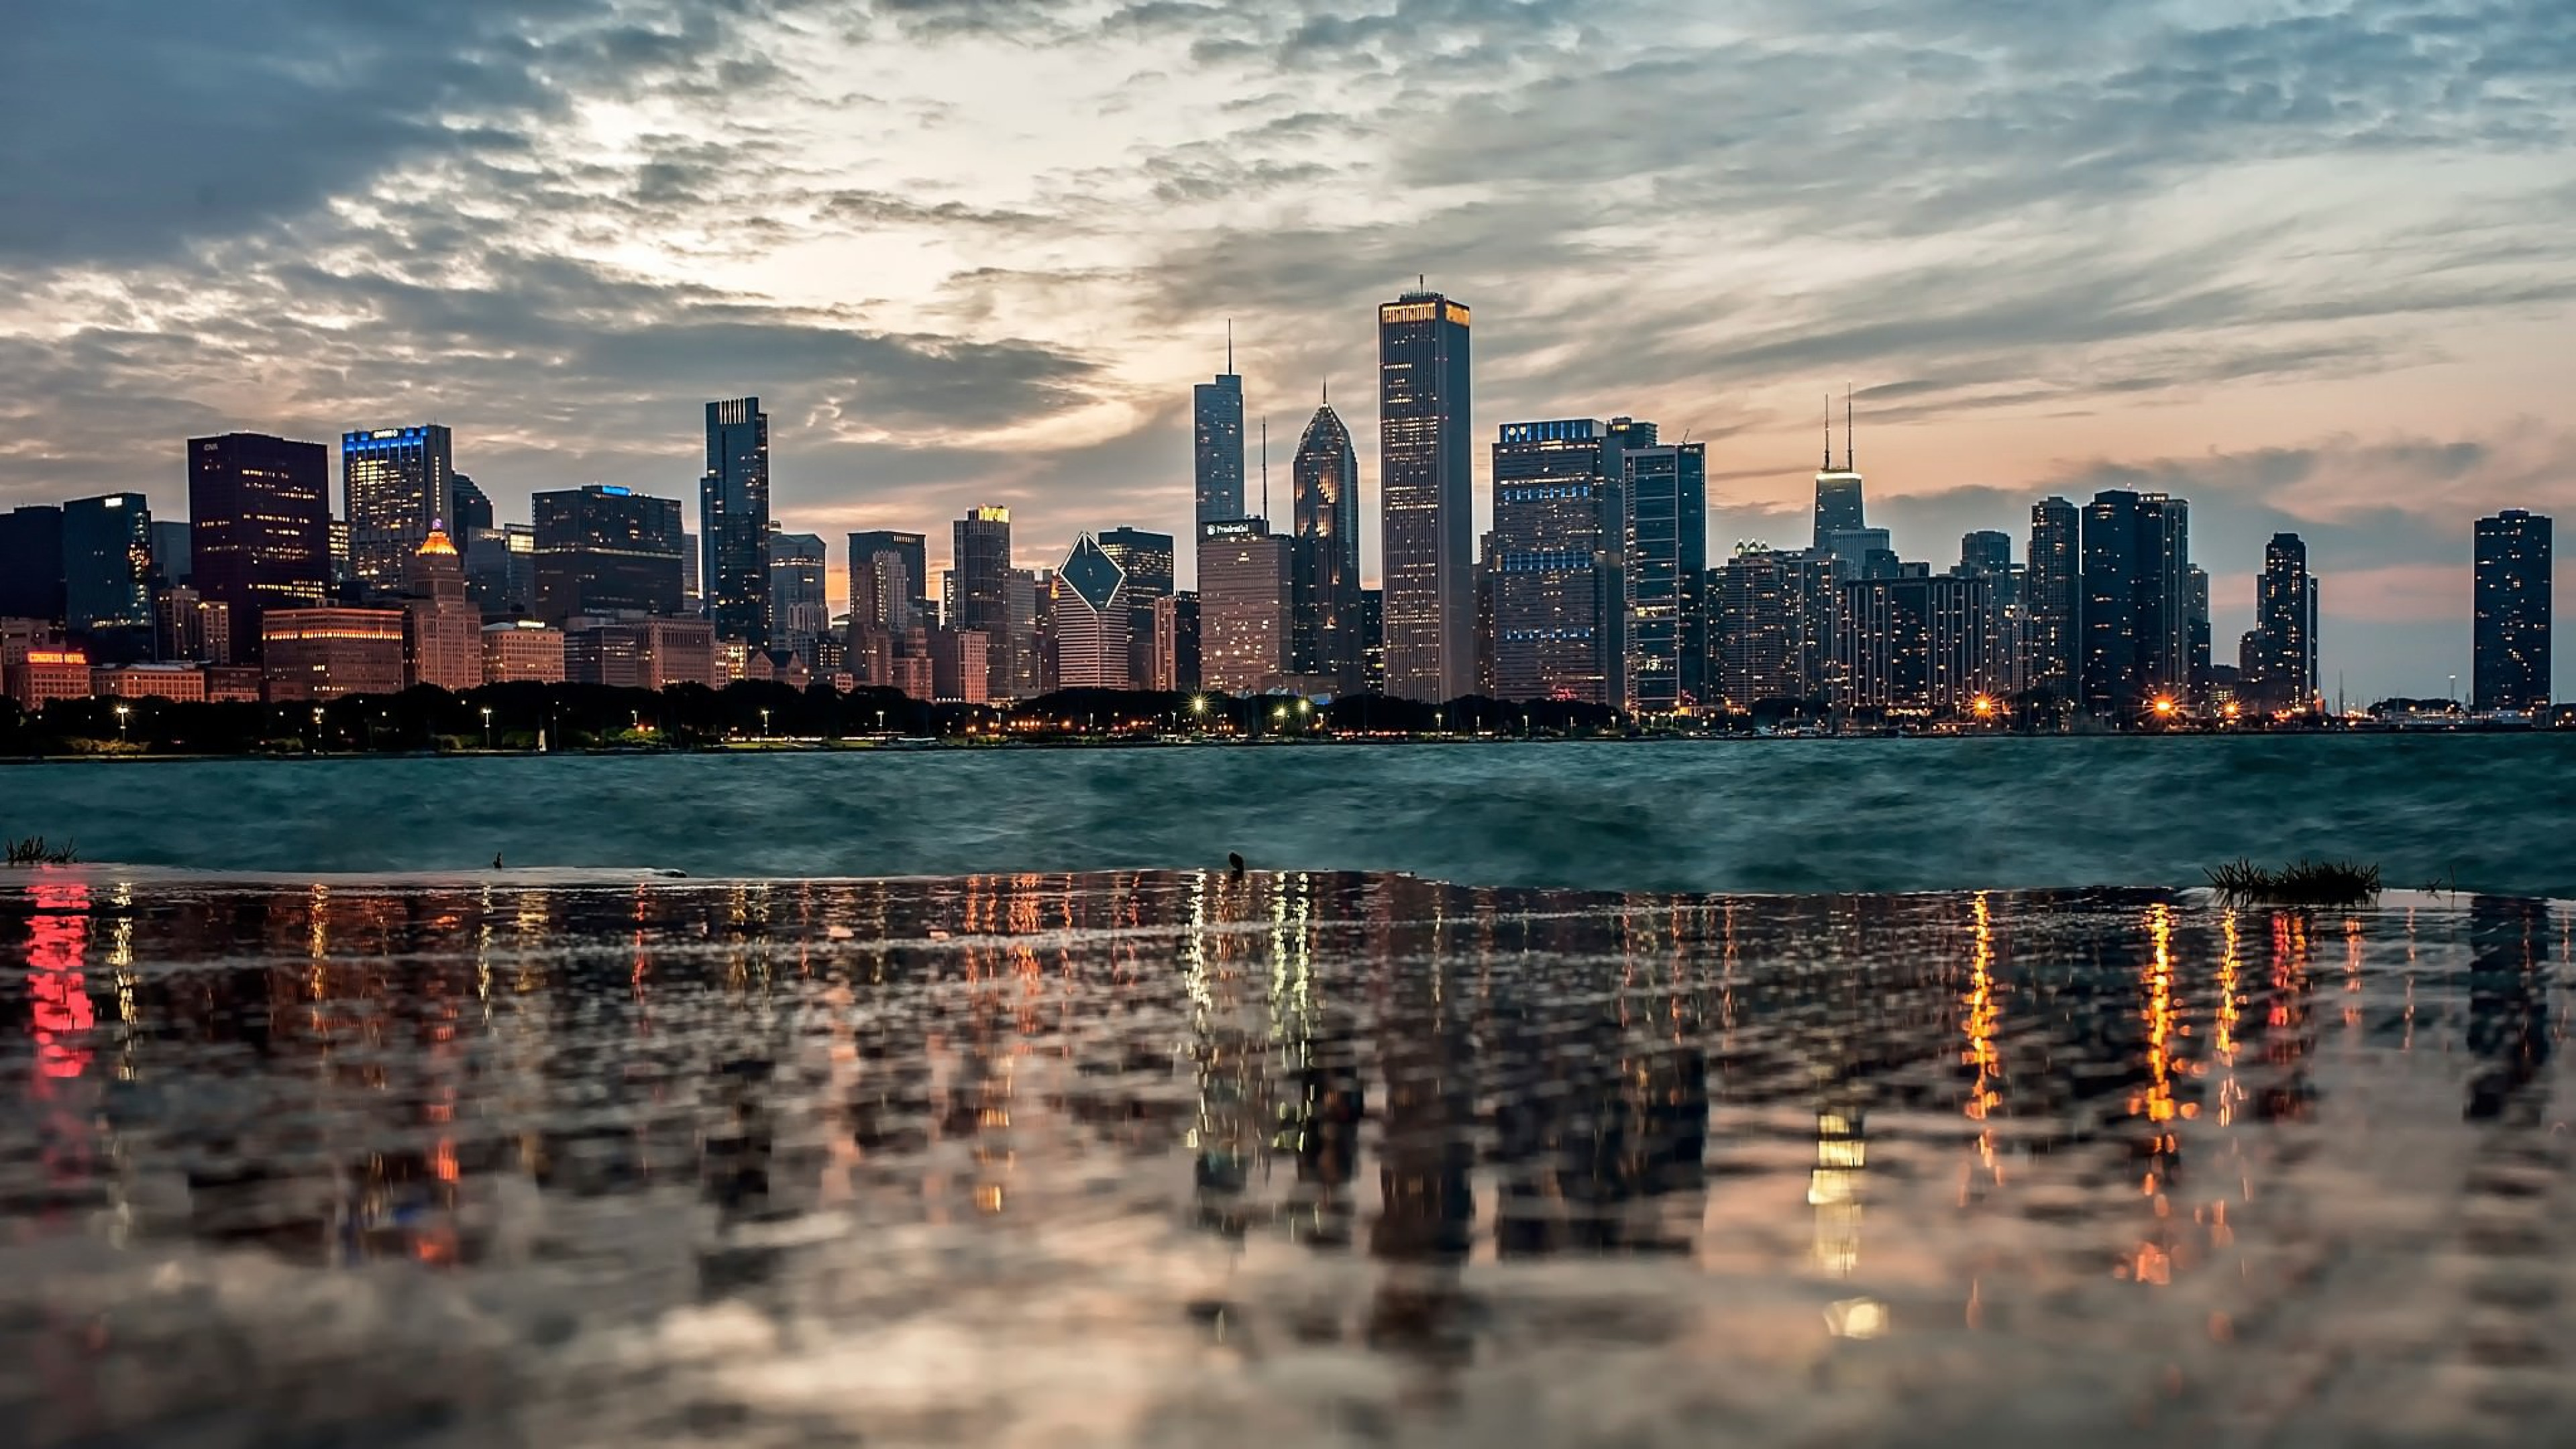 Обои разрешение 1920. Чикаго Скайлайн панорама. Чикаго набережная озера Мичиган.